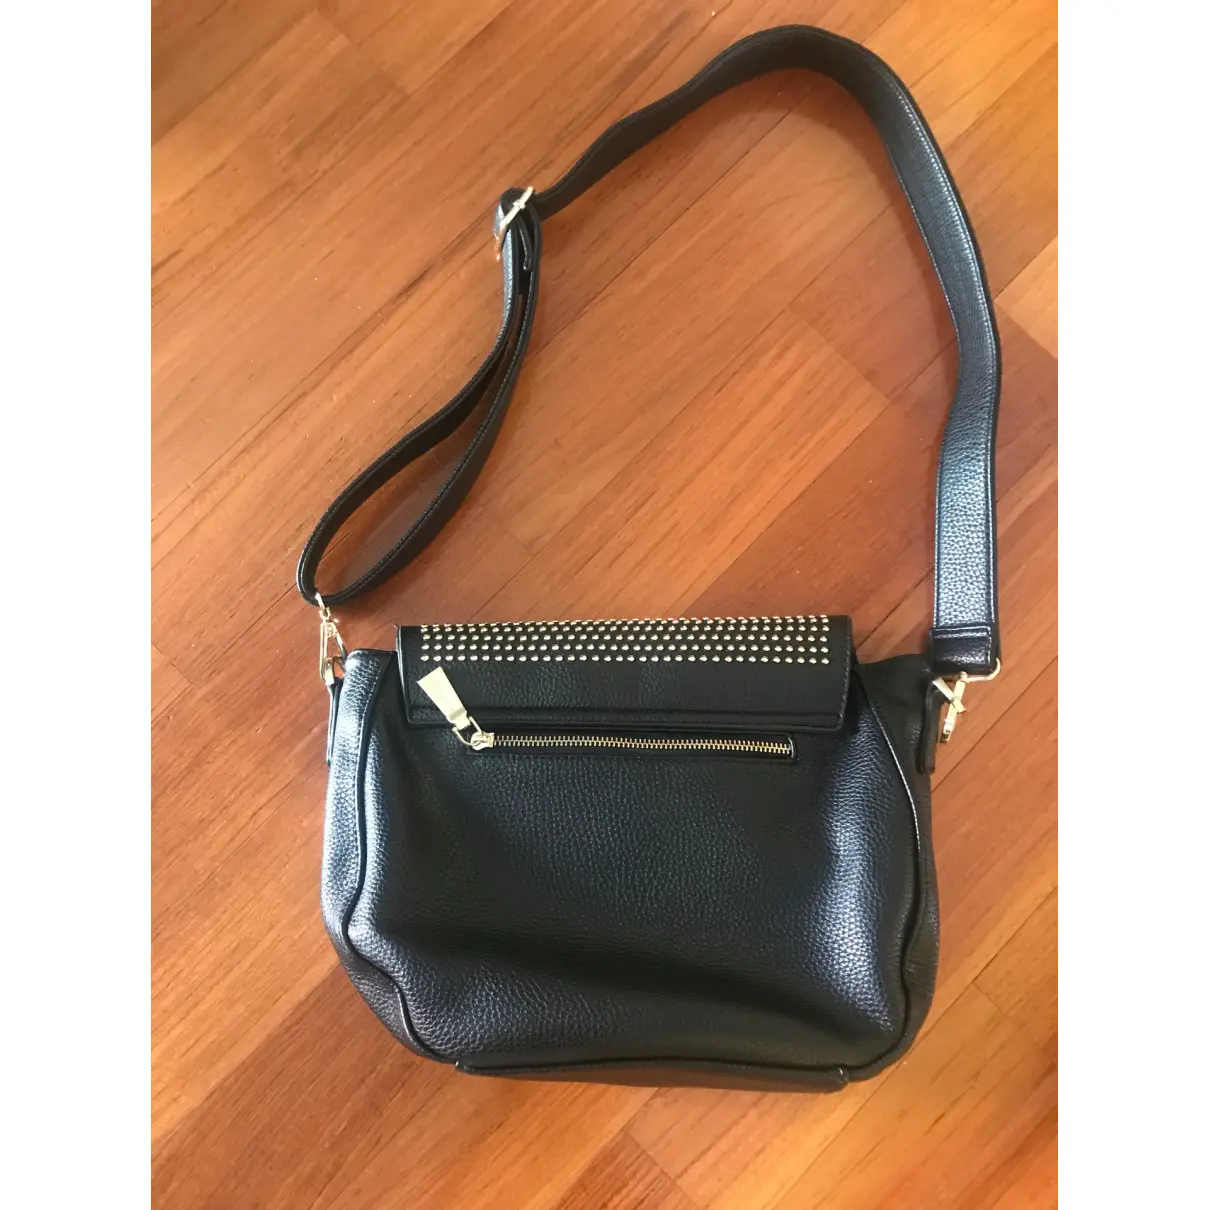 Buy GIO CELLINI Leather handbag online